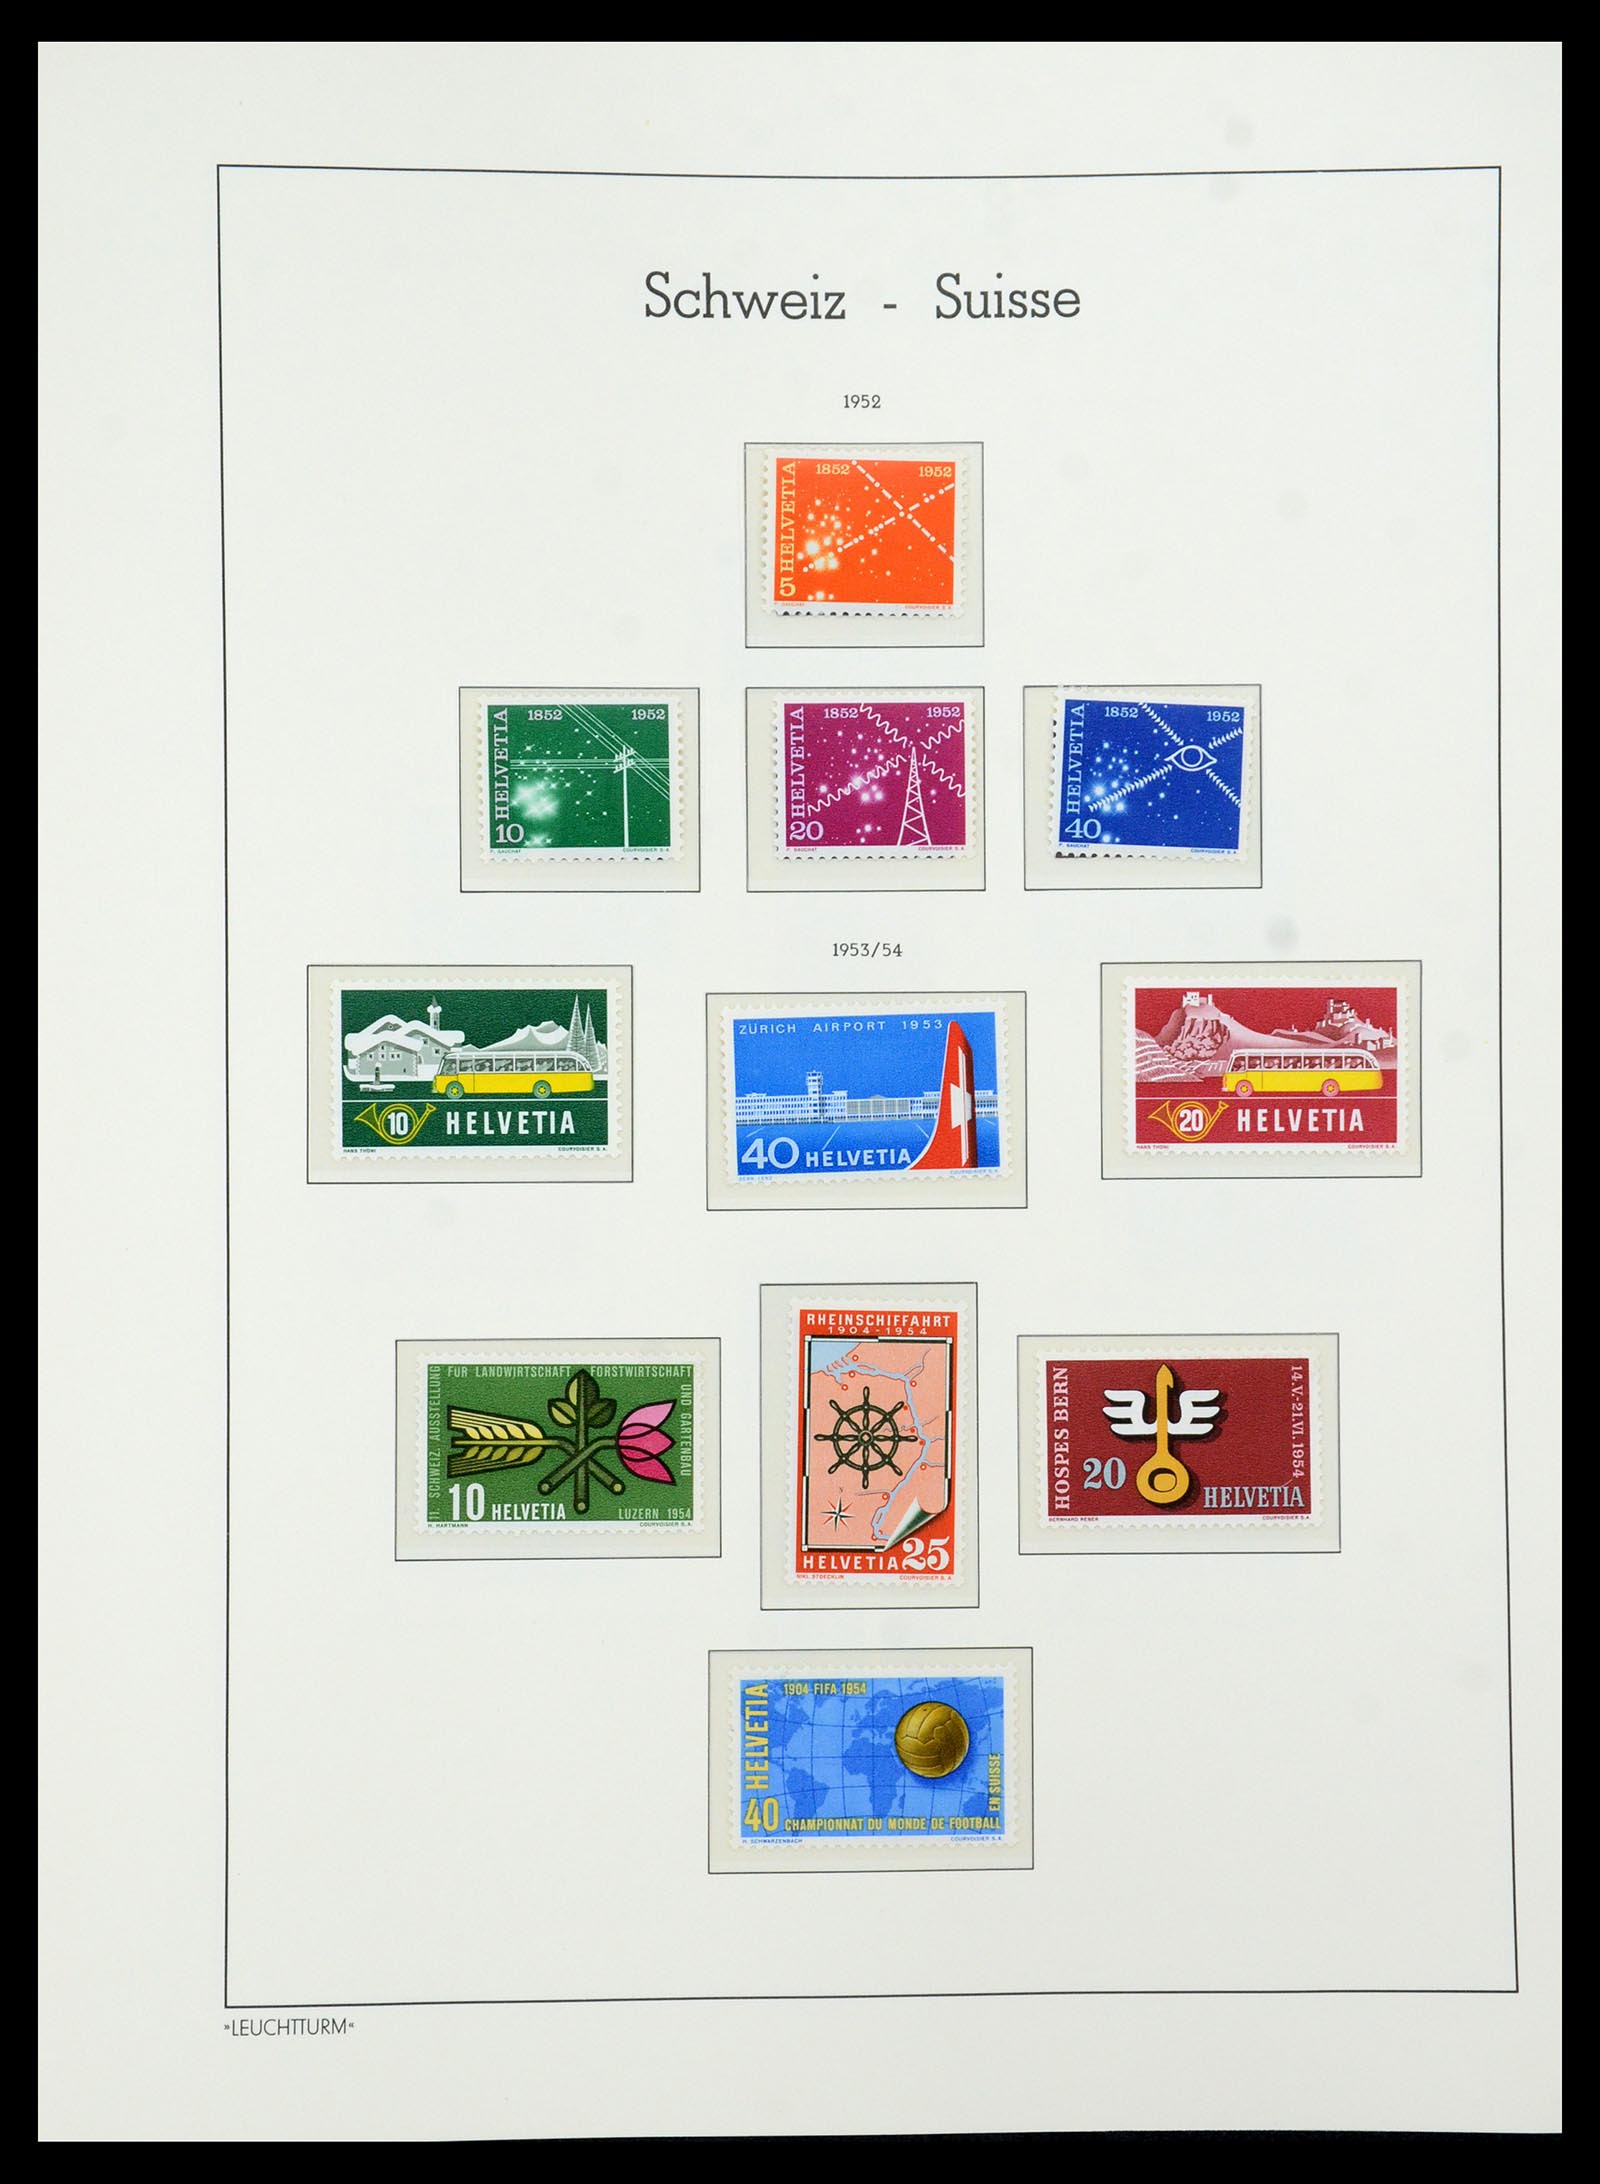 36284 054 - Stamp collection 36284 Switzerland 1854-2006.